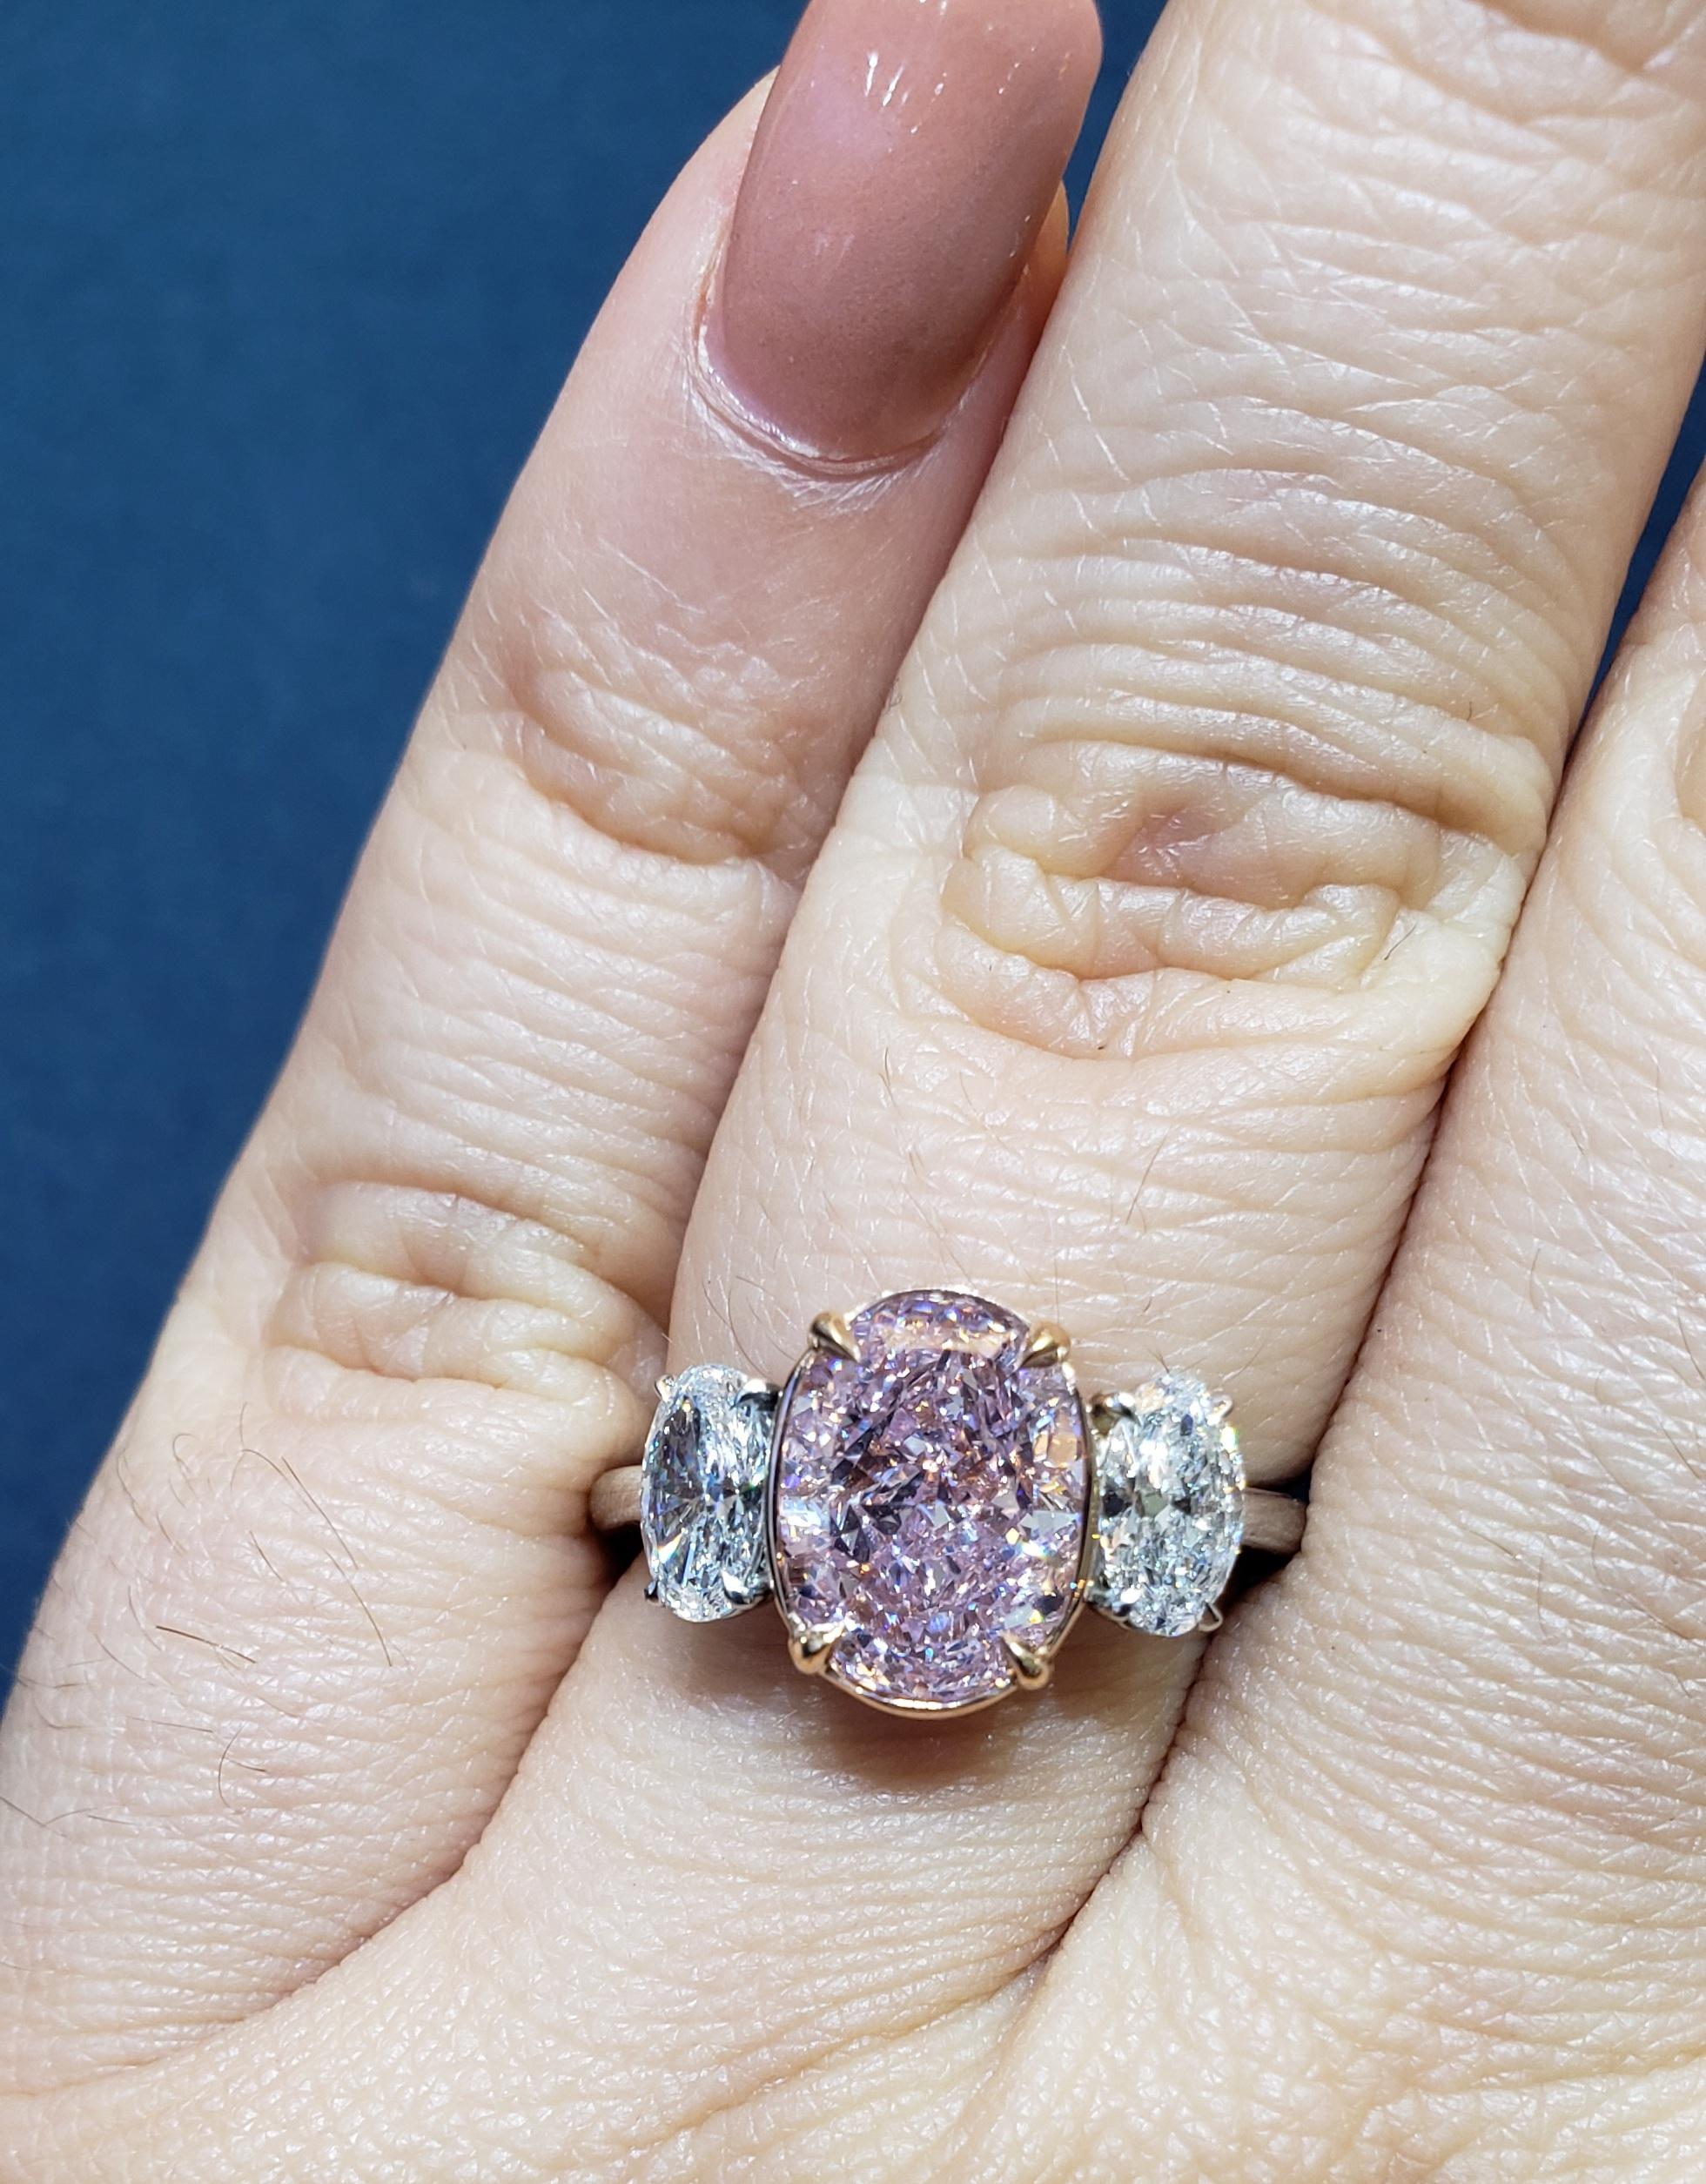 David Rosenberg 2.67 Carat Oval Fancy Pink Purple GIA Diamond Engagement Ring For Sale 3